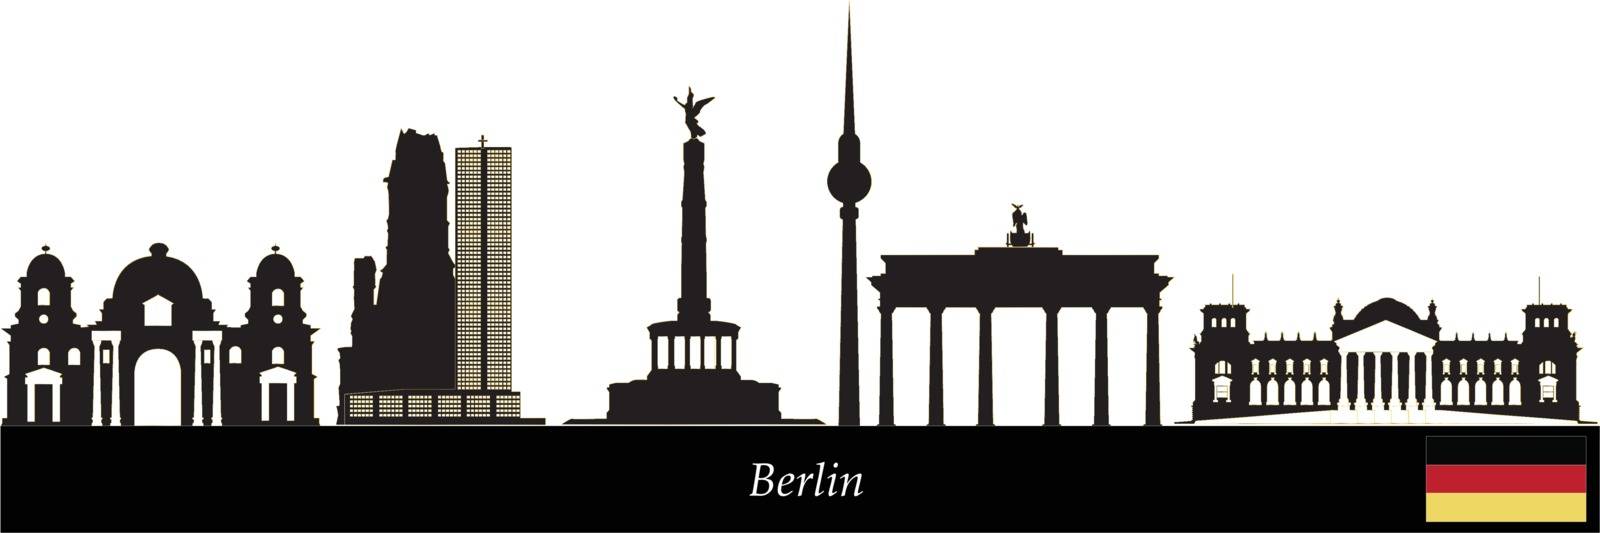 berlin skyline by compuinfoto